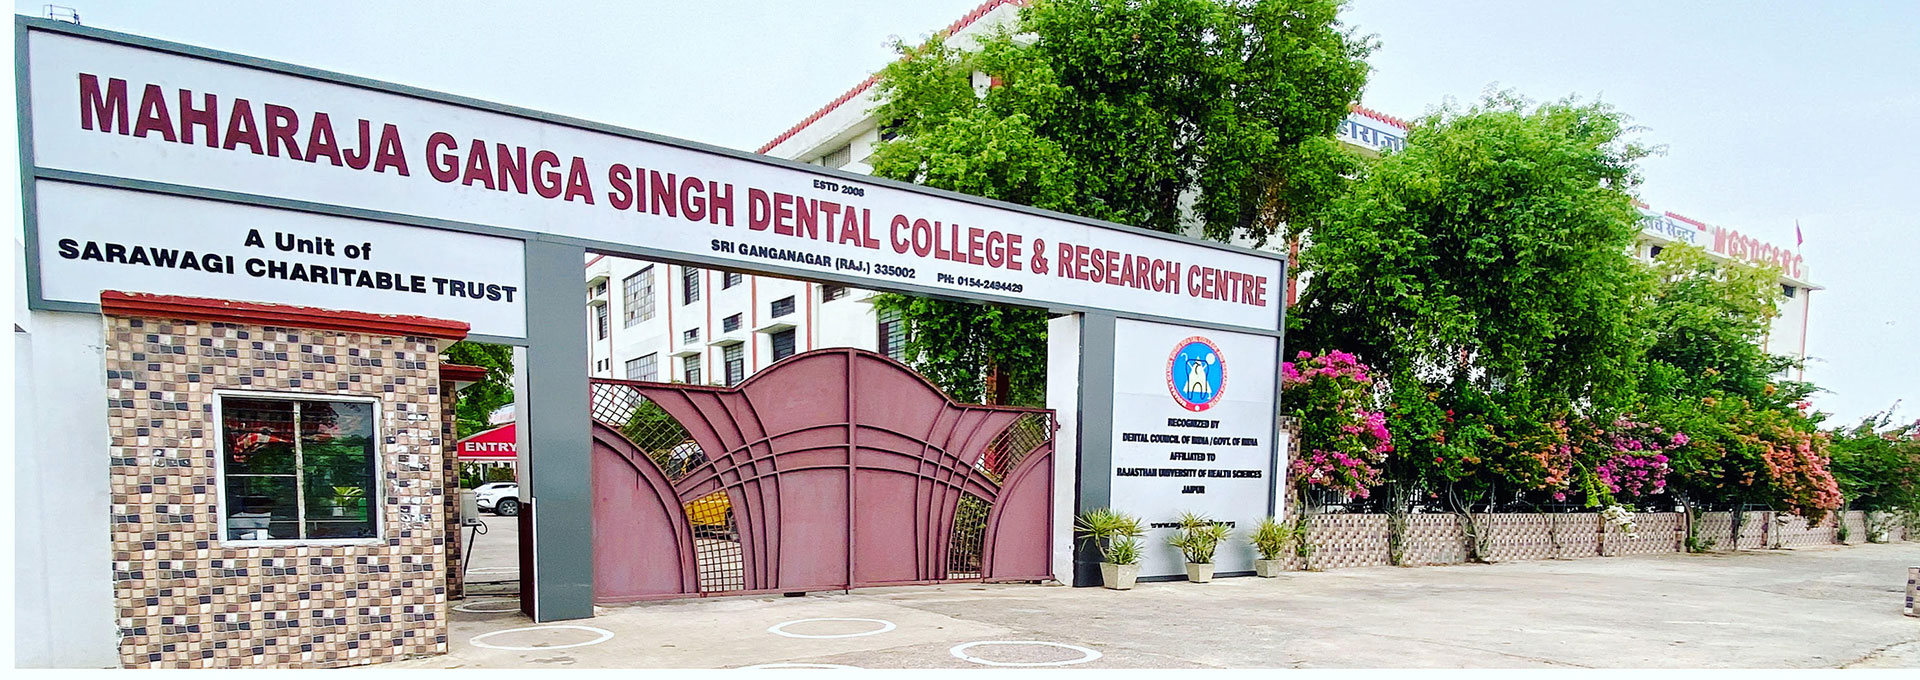 Maharaja Ganga Singh Dental College Sriganganagar Admission, Fees, Ranking, Reviews